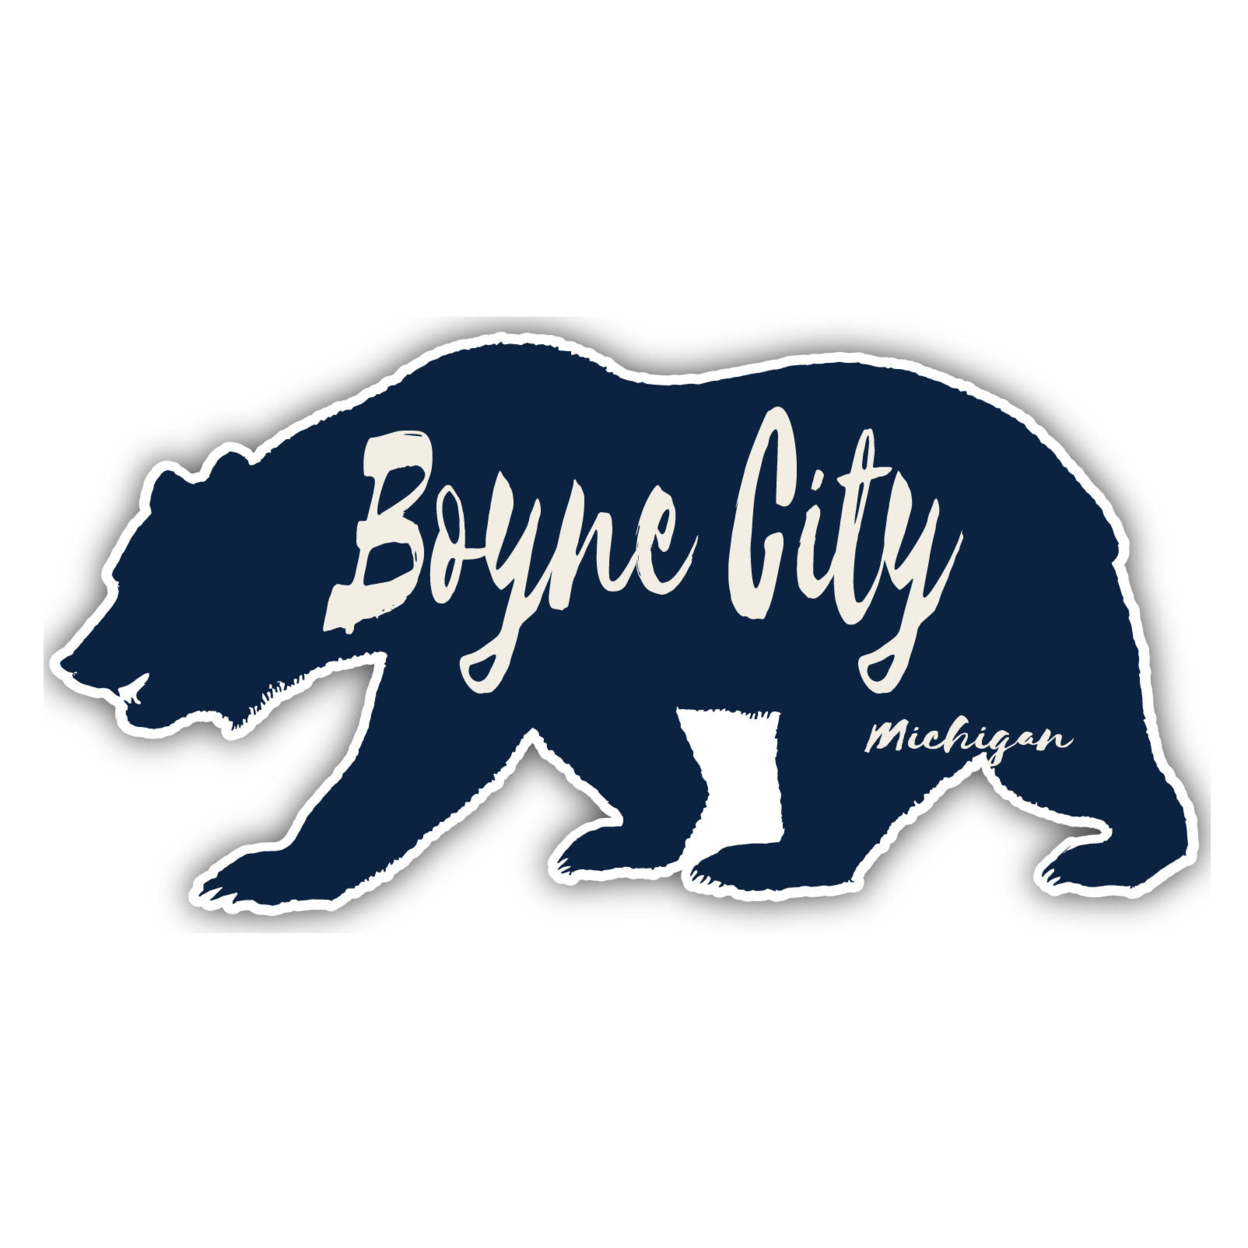 Boyne City Michigan Souvenir Decorative Stickers (Choose Theme And Size) - Single Unit, 8-Inch, Adventures Awaits